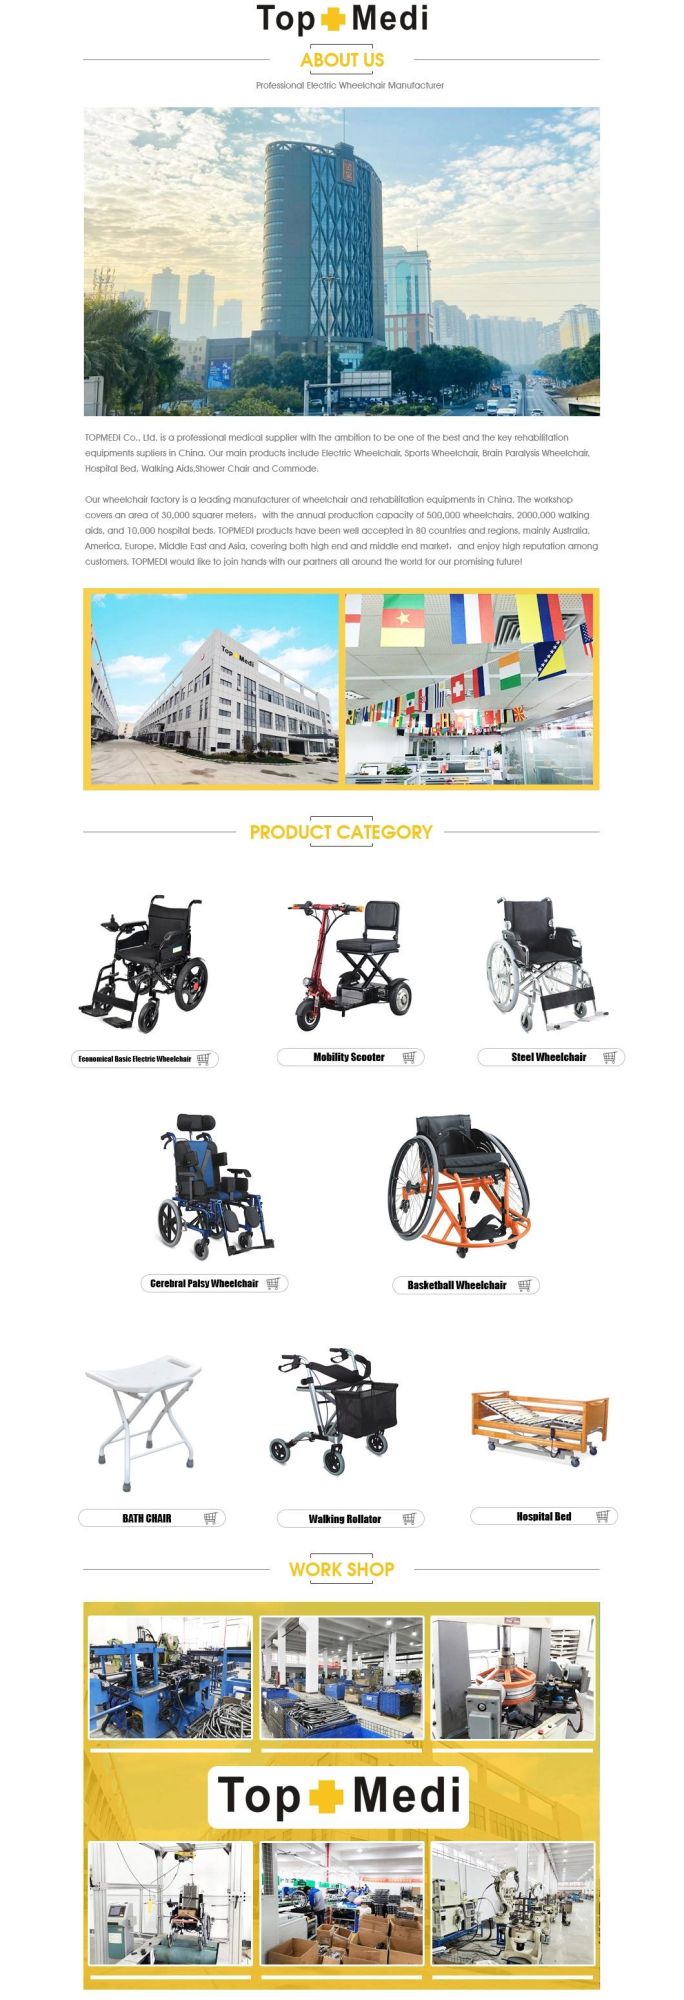 6km/H Steel Topmedi Carton Package 90X48X85 Cm Foldable Wheelchiar Motorized Wheelchair